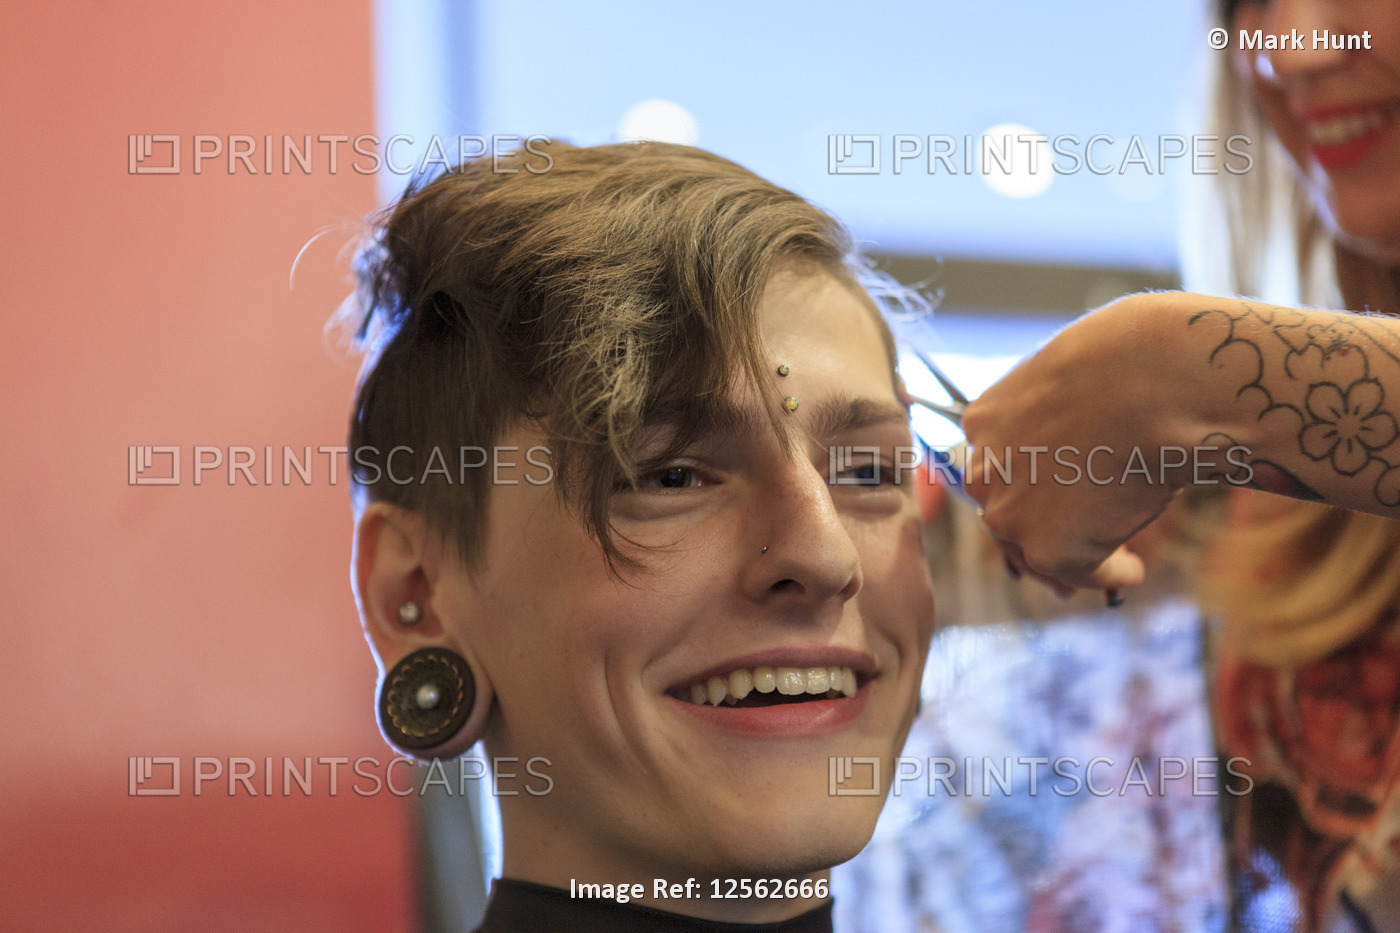 Stylish man with a spinal cord injury at a hair salon getting a hair cut